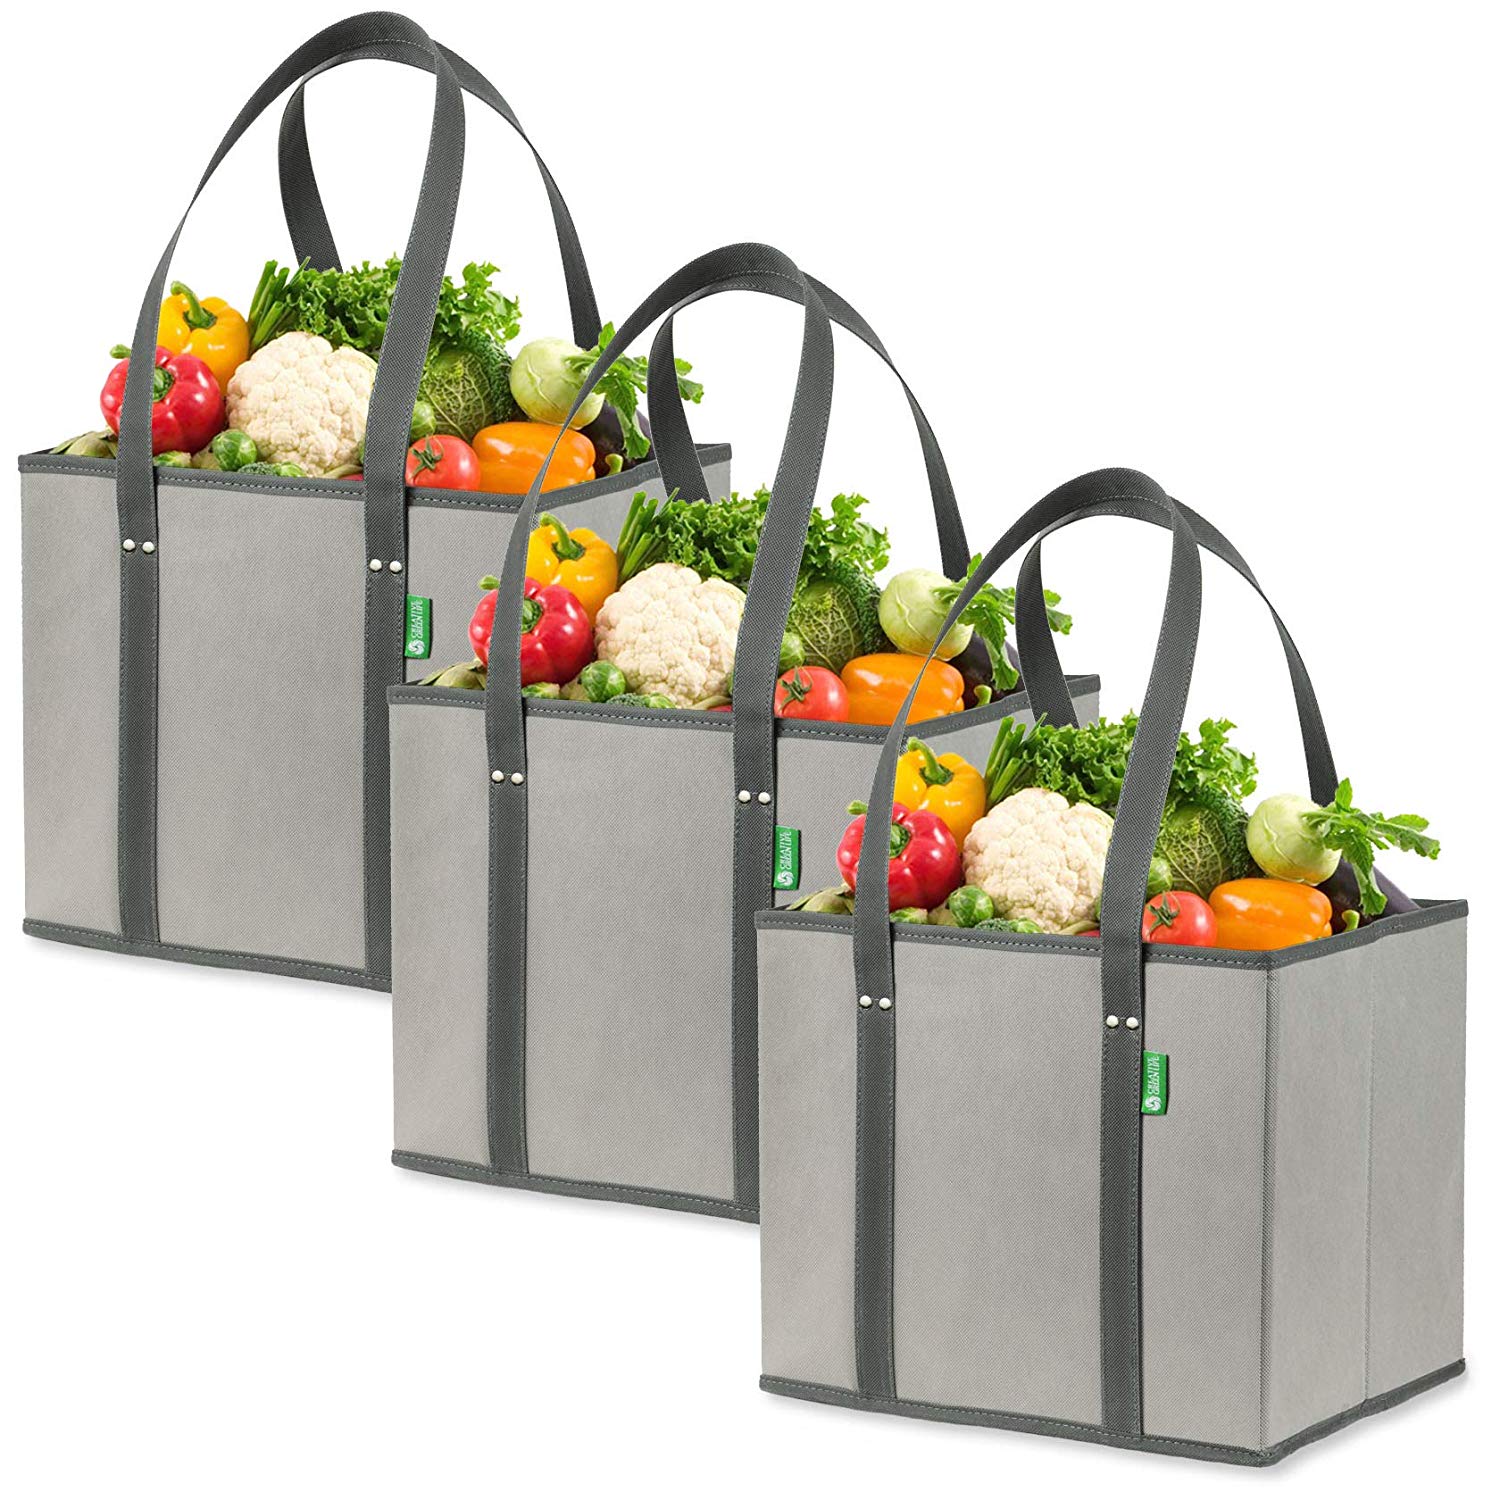 reusable grocery bags